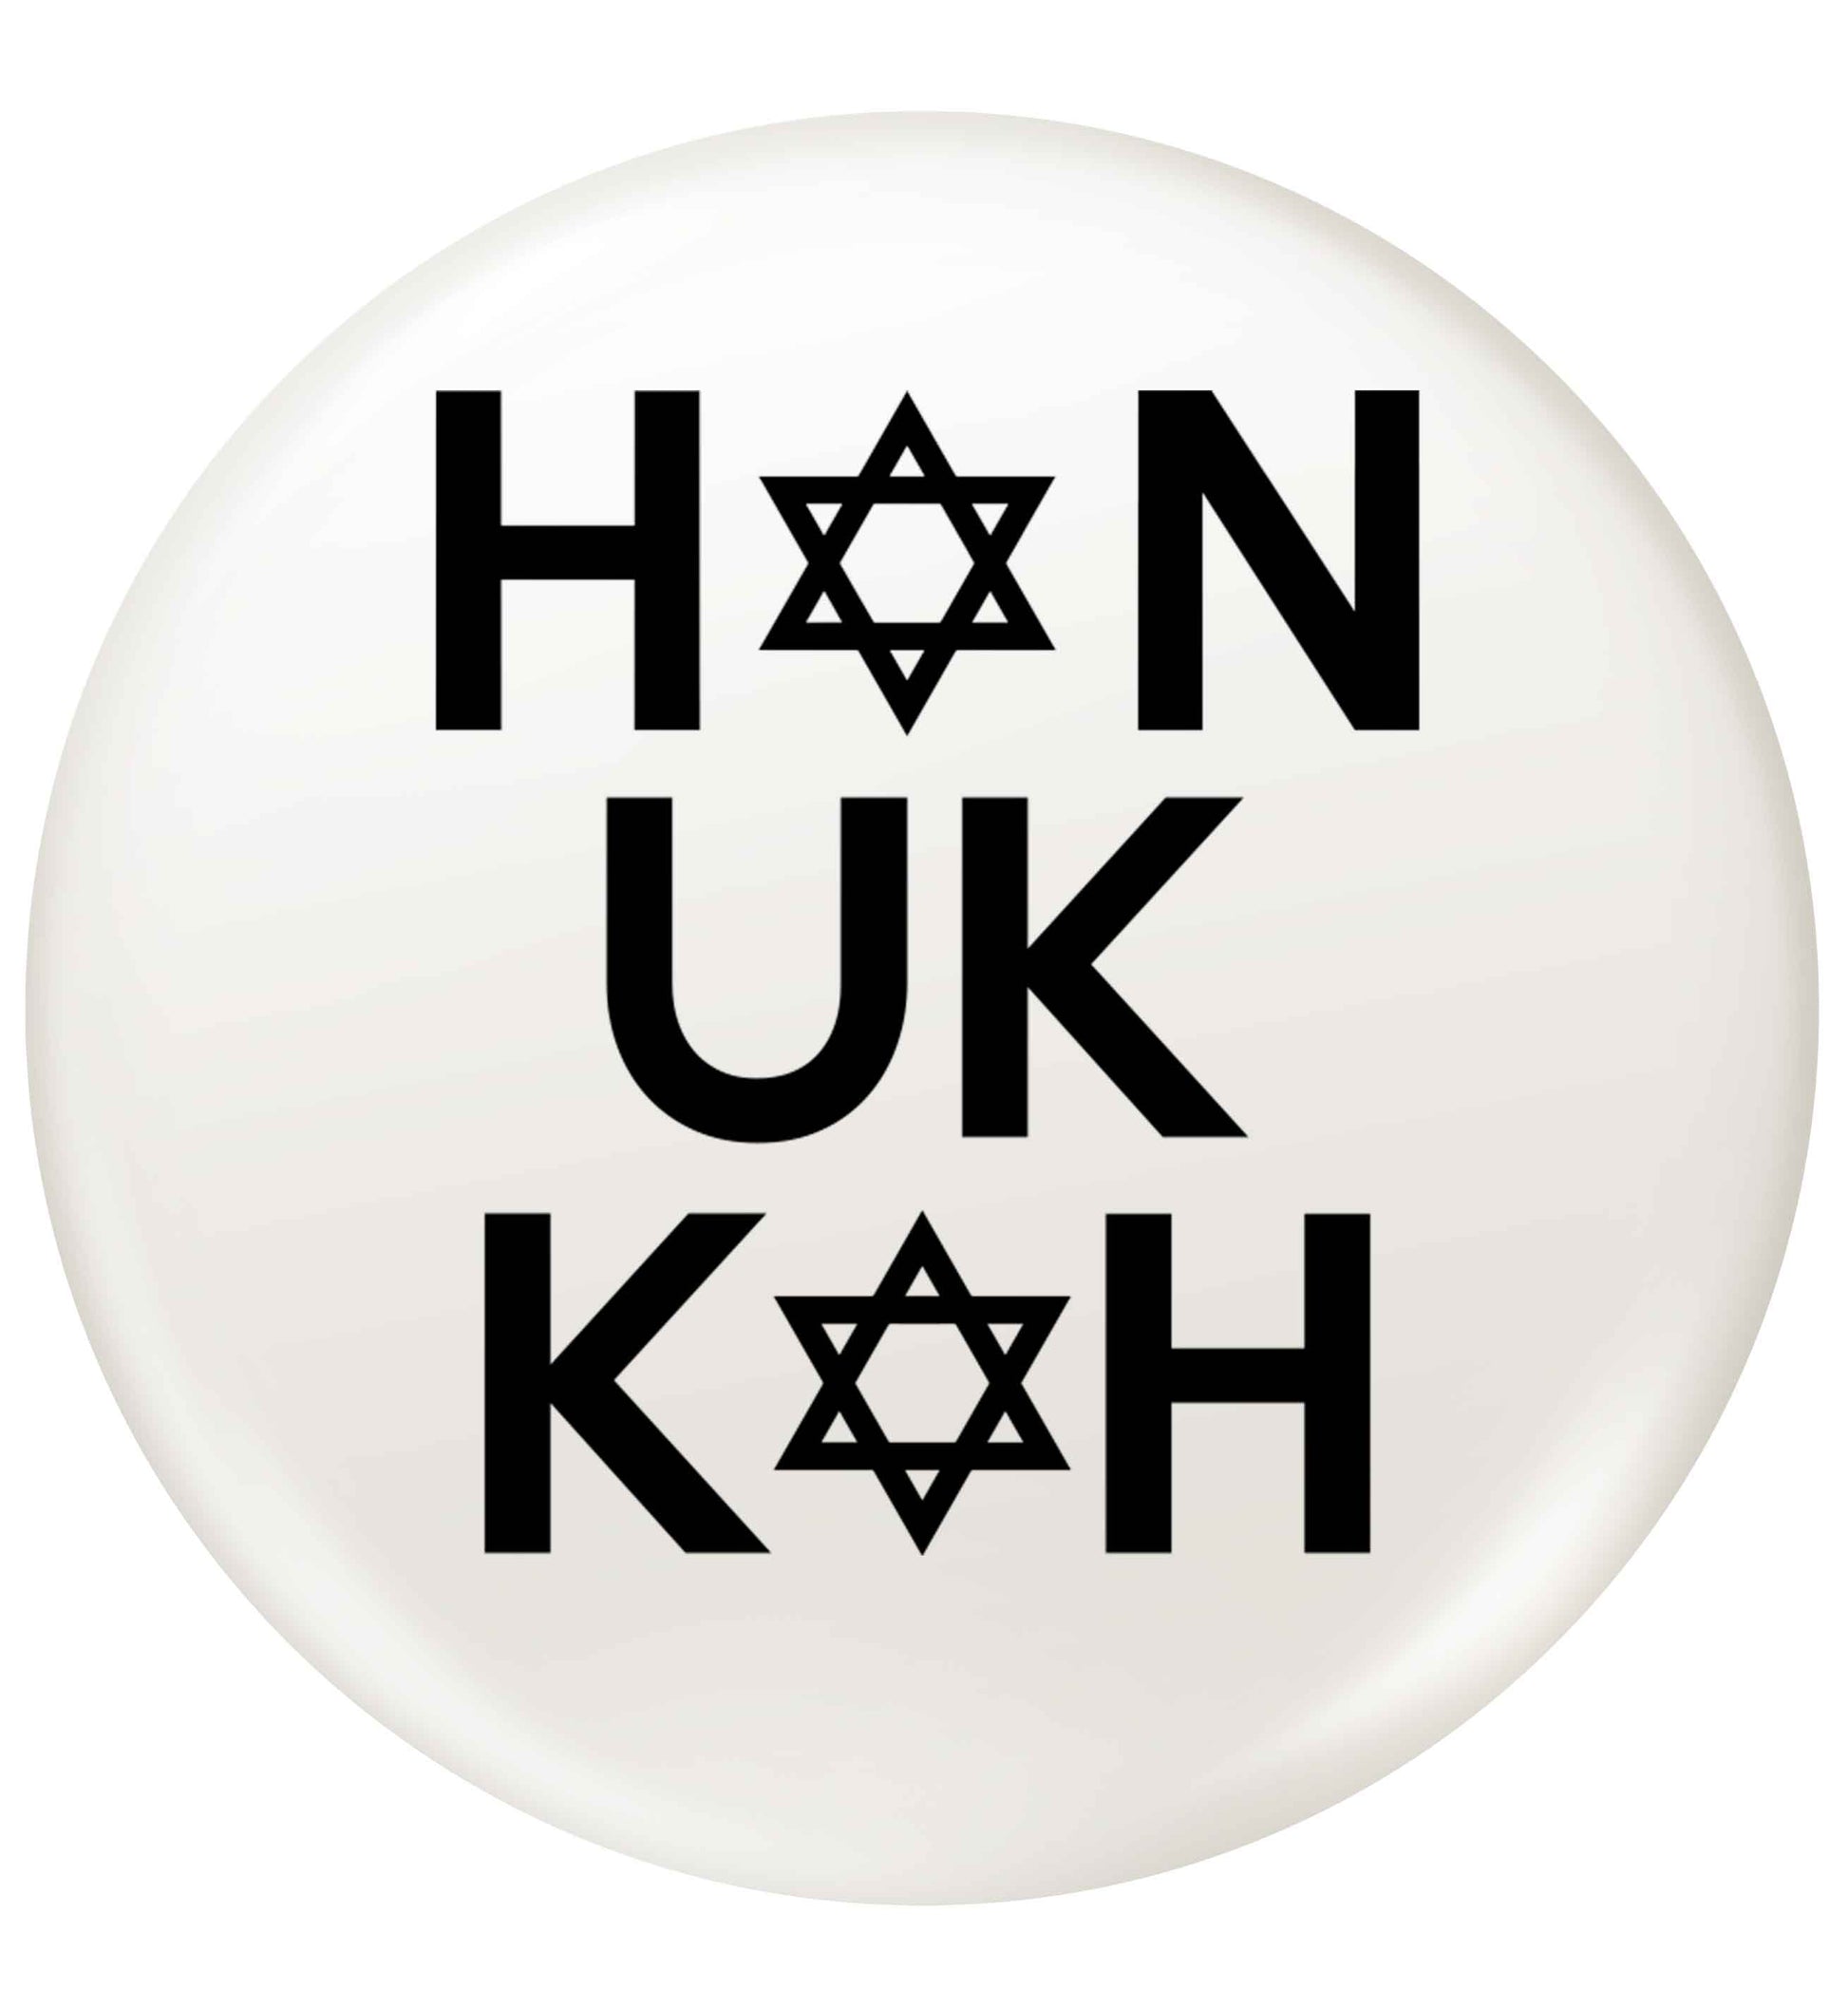 Han uk kah  Hanukkah star of david small 25mm Pin badge